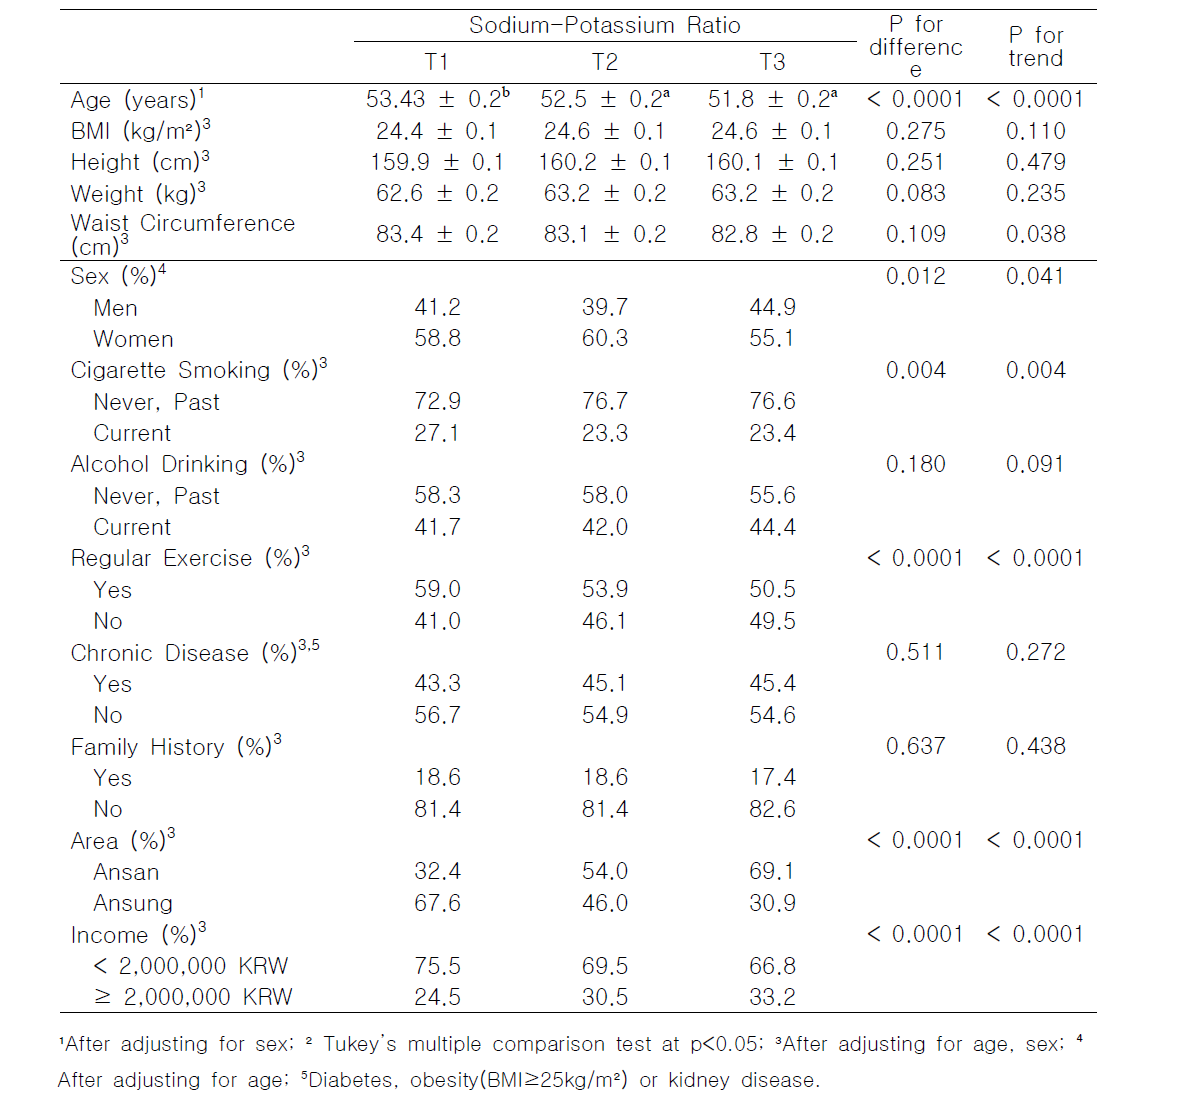 Distribution of confounding factors according to urinary sodium-potassium ratio in Sample 3